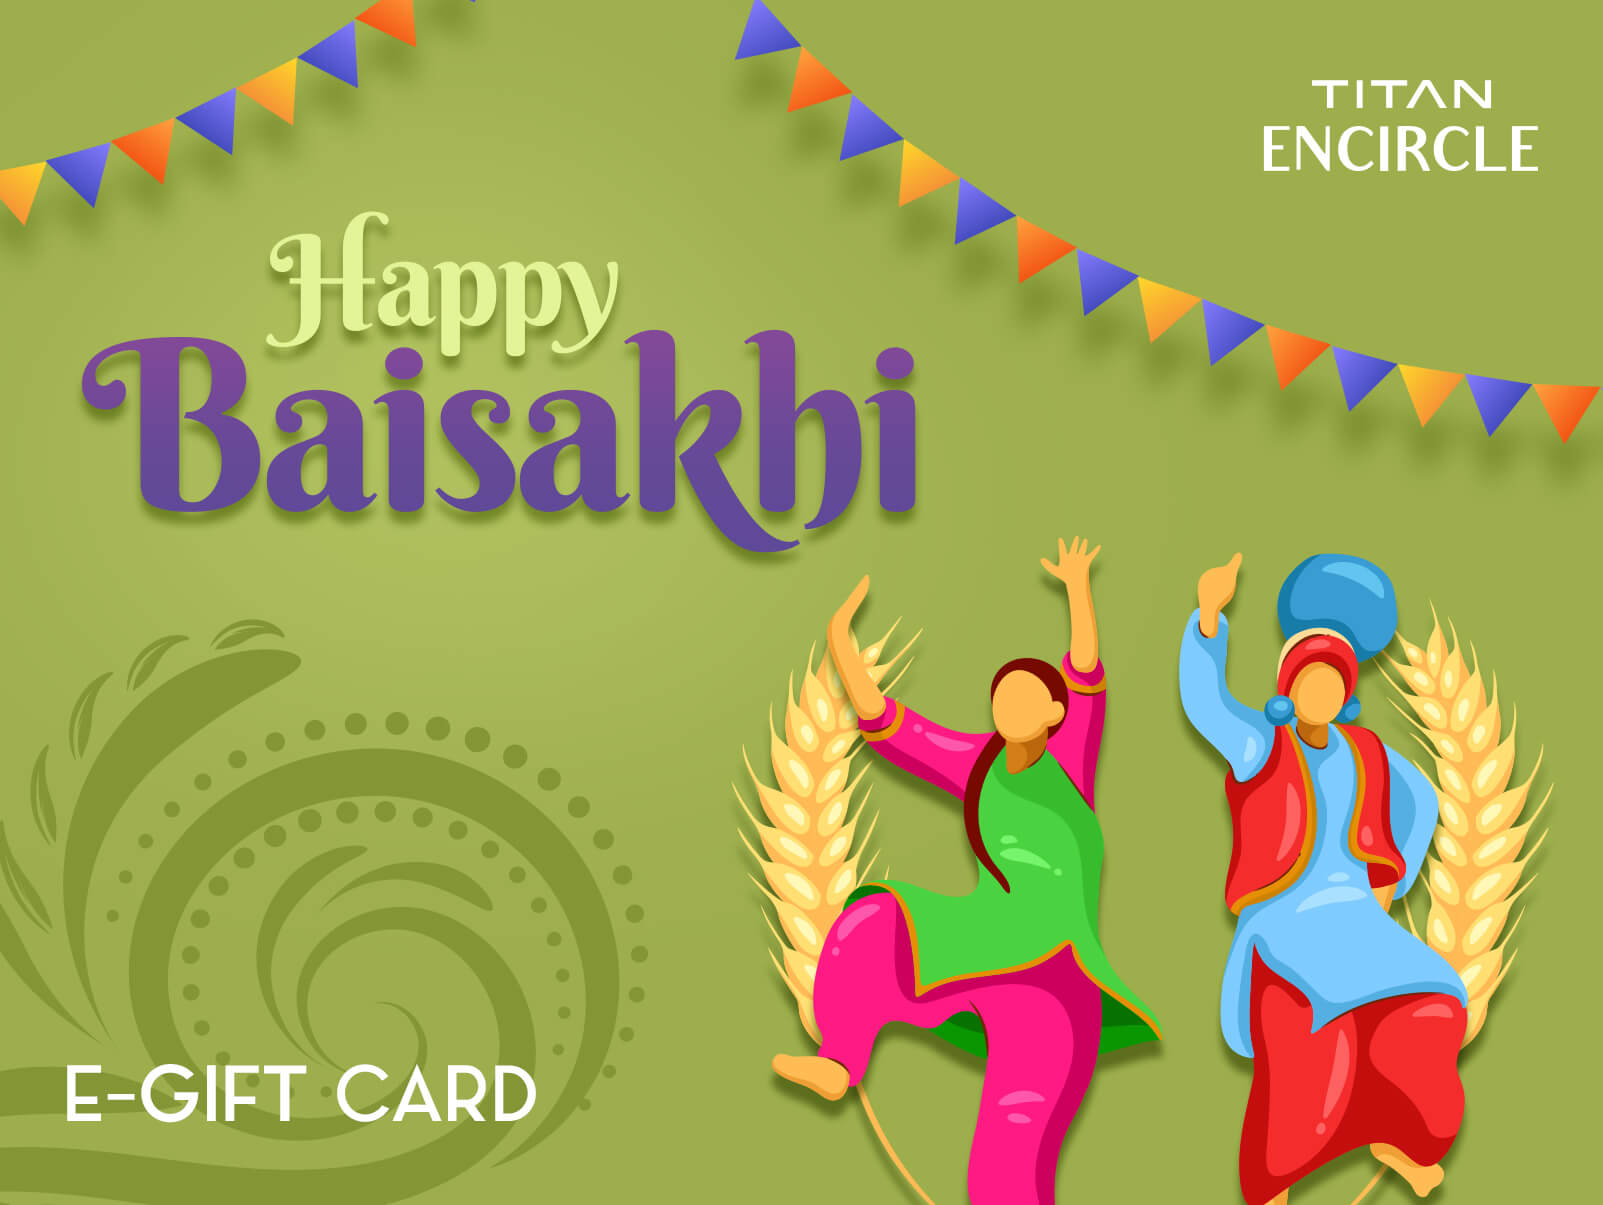 Purchase E Gift Card on Baisakhi